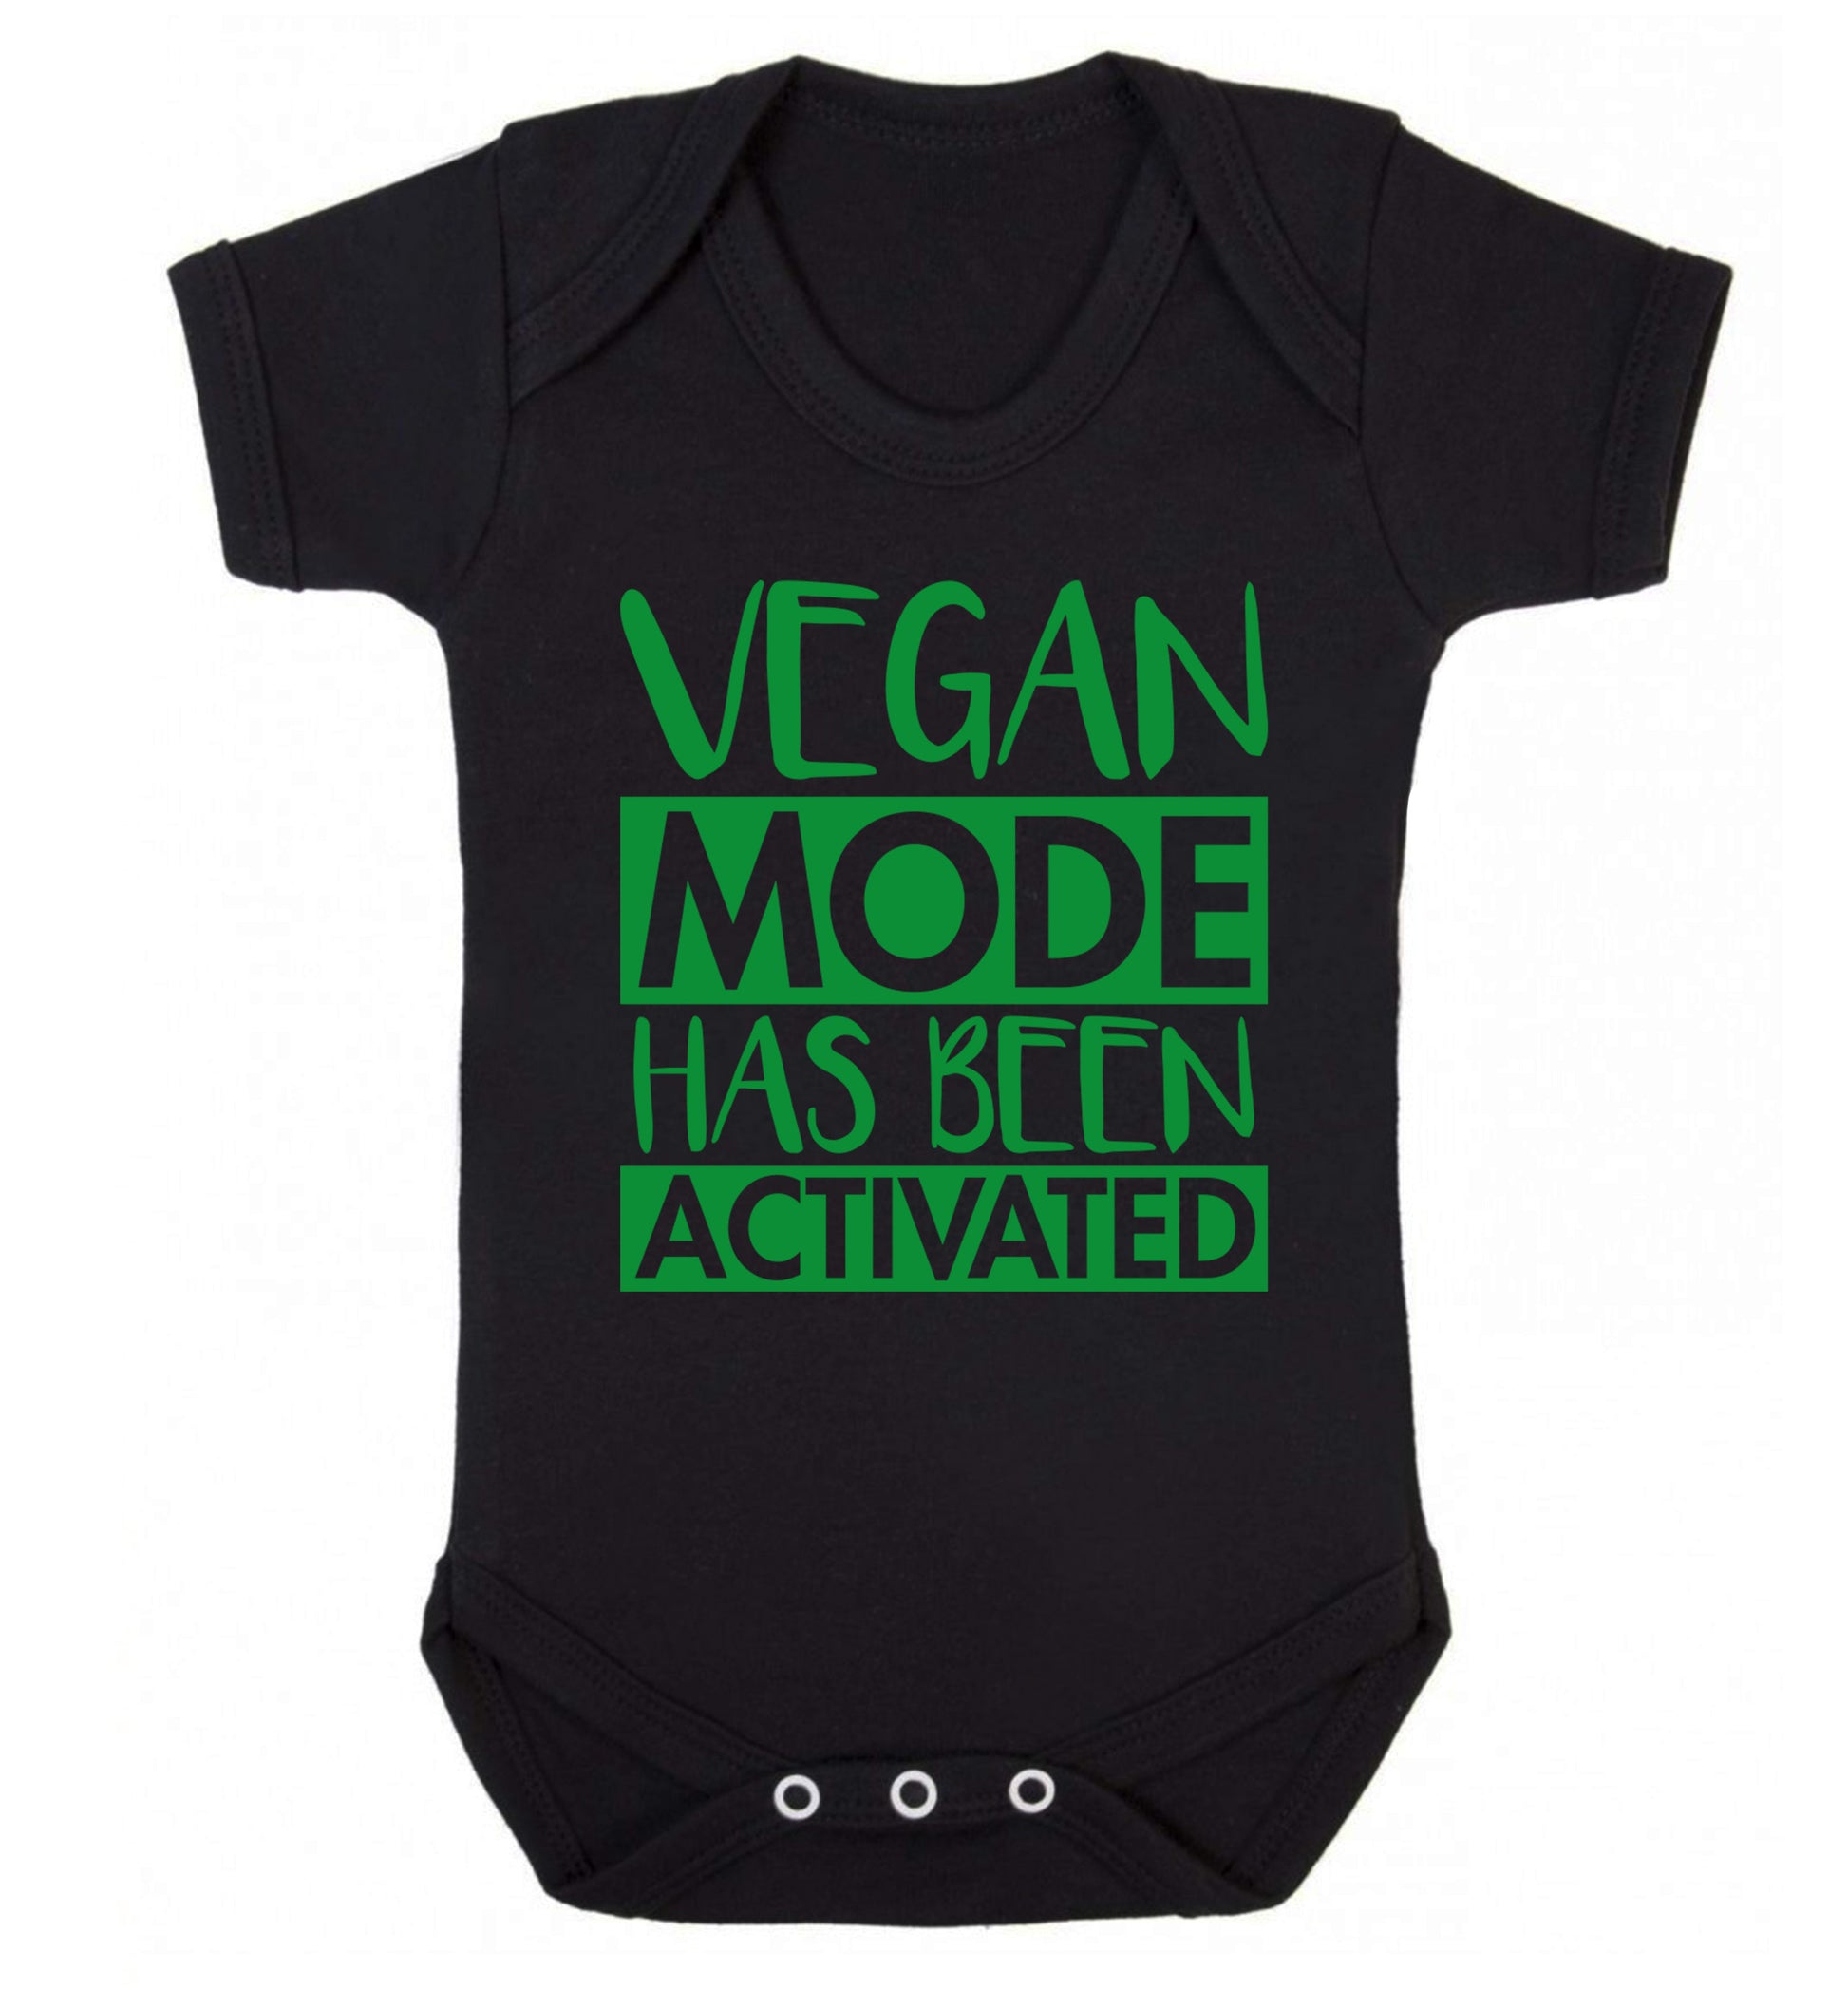 Vegan mode activated Baby Vest black 18-24 months